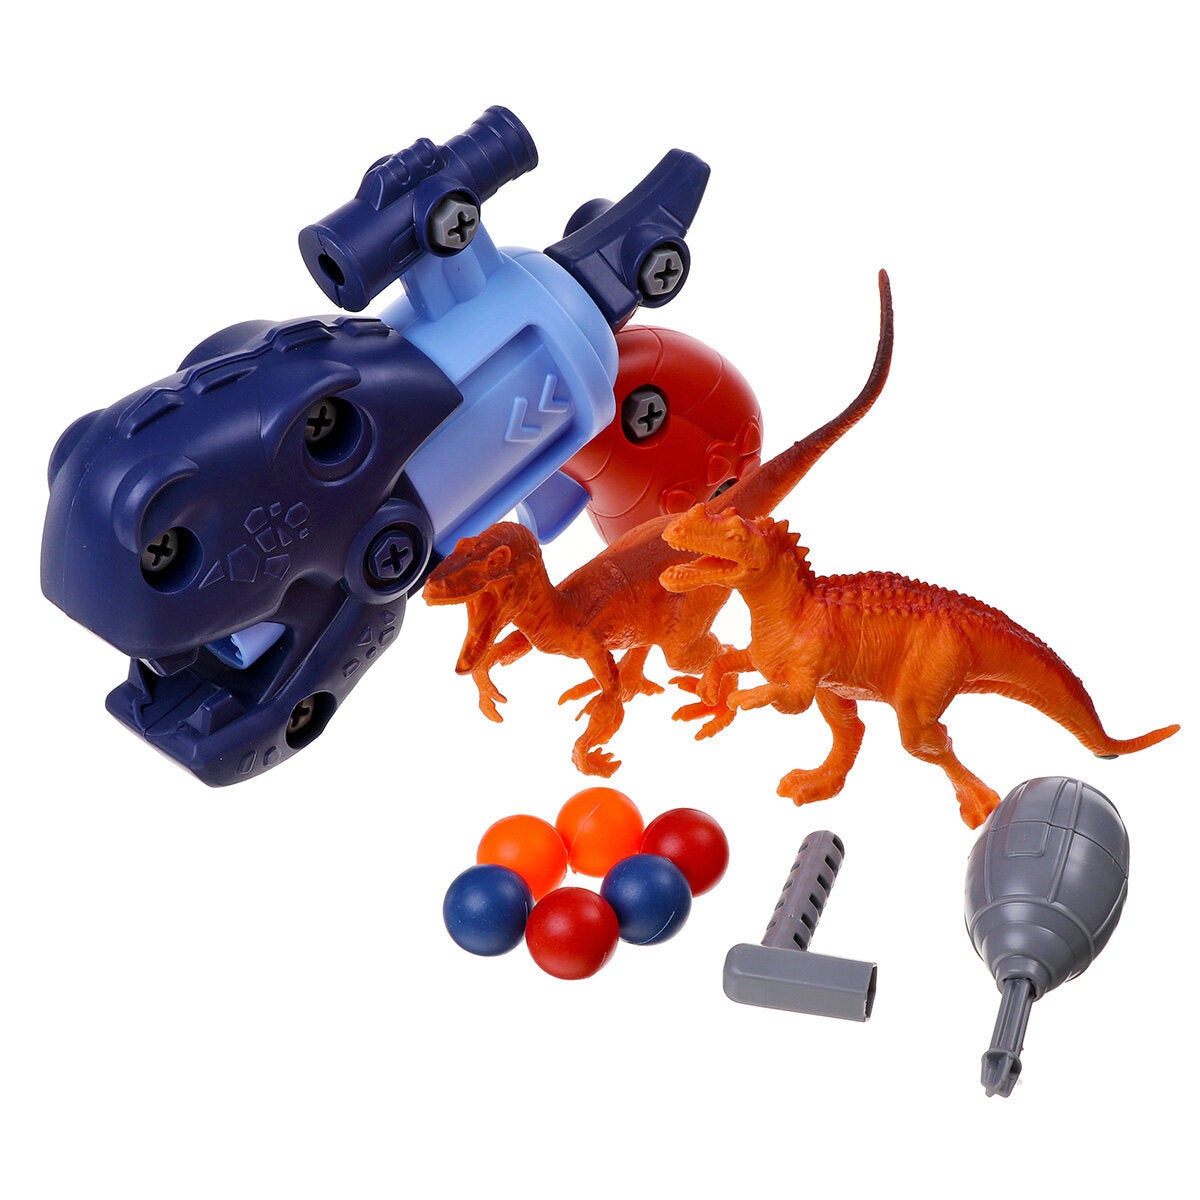 DIY Disassembly Dinosaur/Airplane Guns Play Set Model Blocks Assemble Educational Toy for Kids Gift